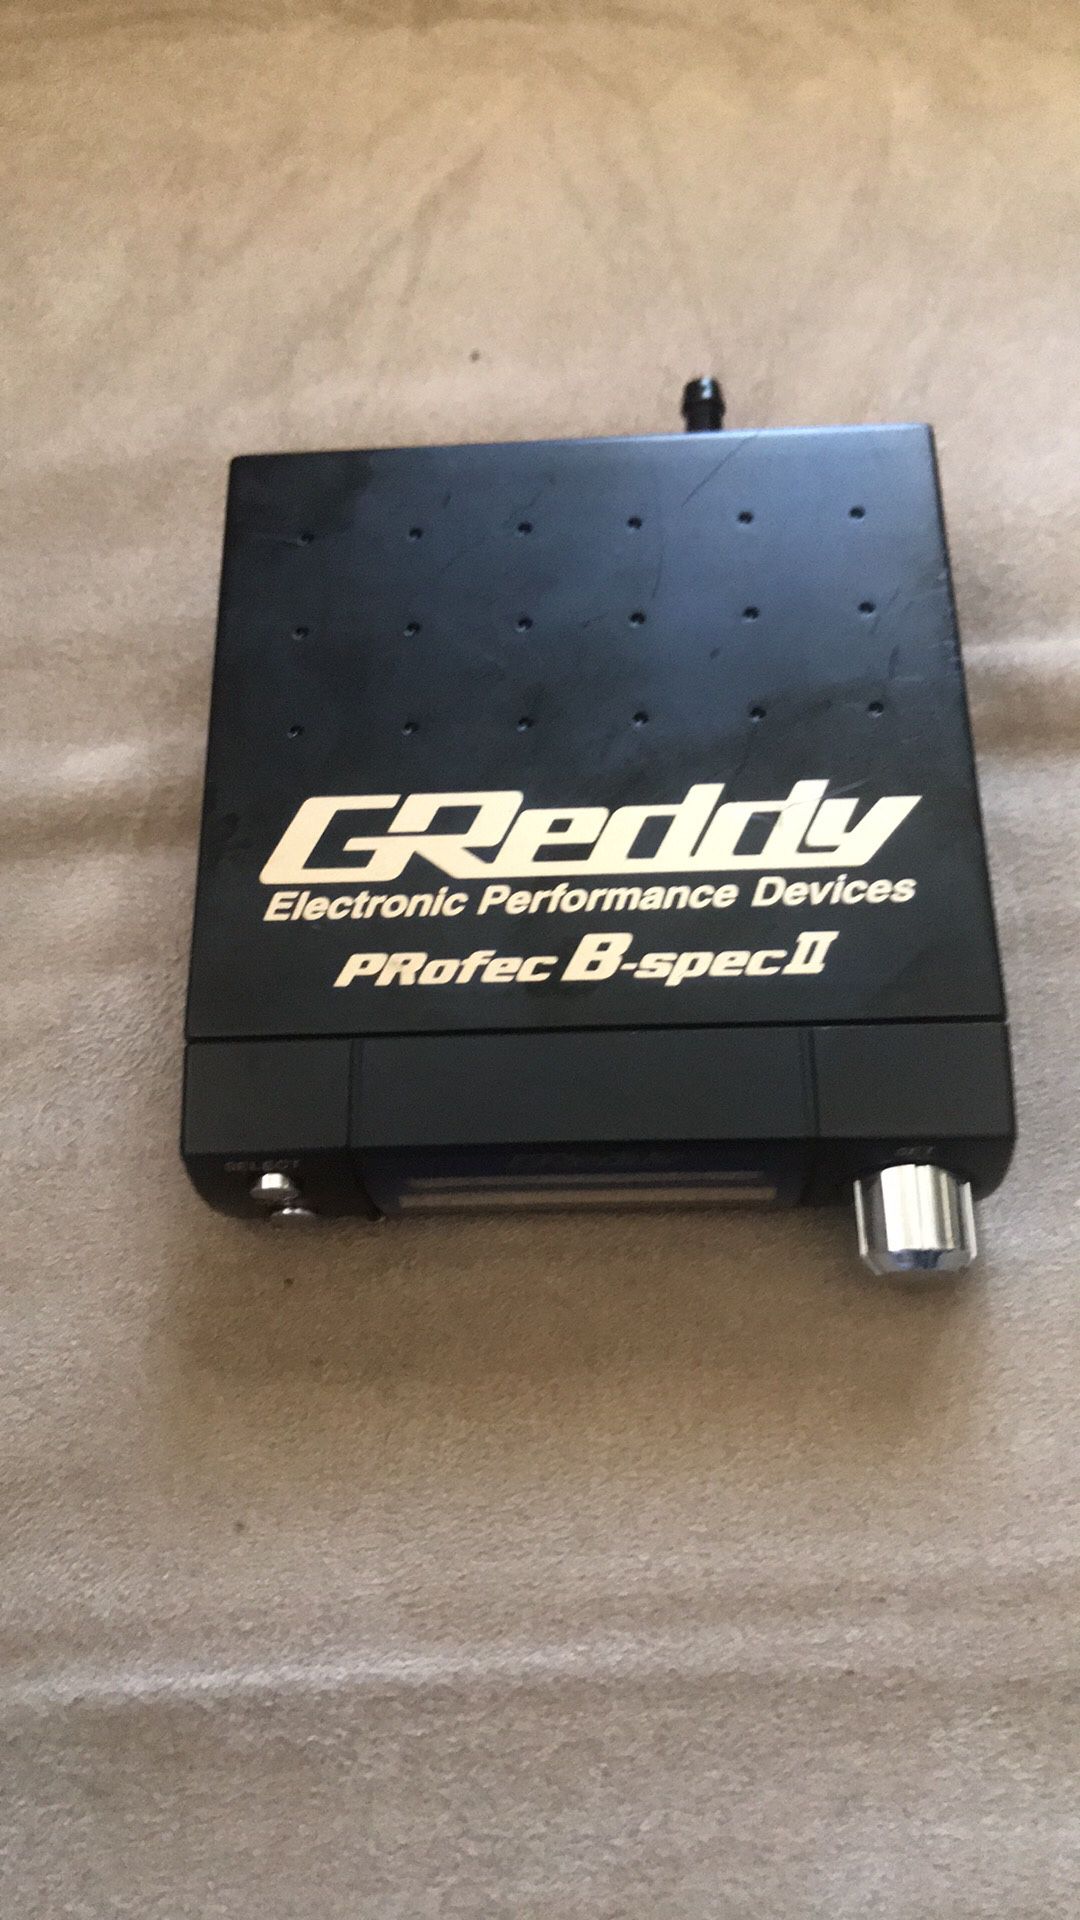 Greddy Profec-B spec II electronic boost controller